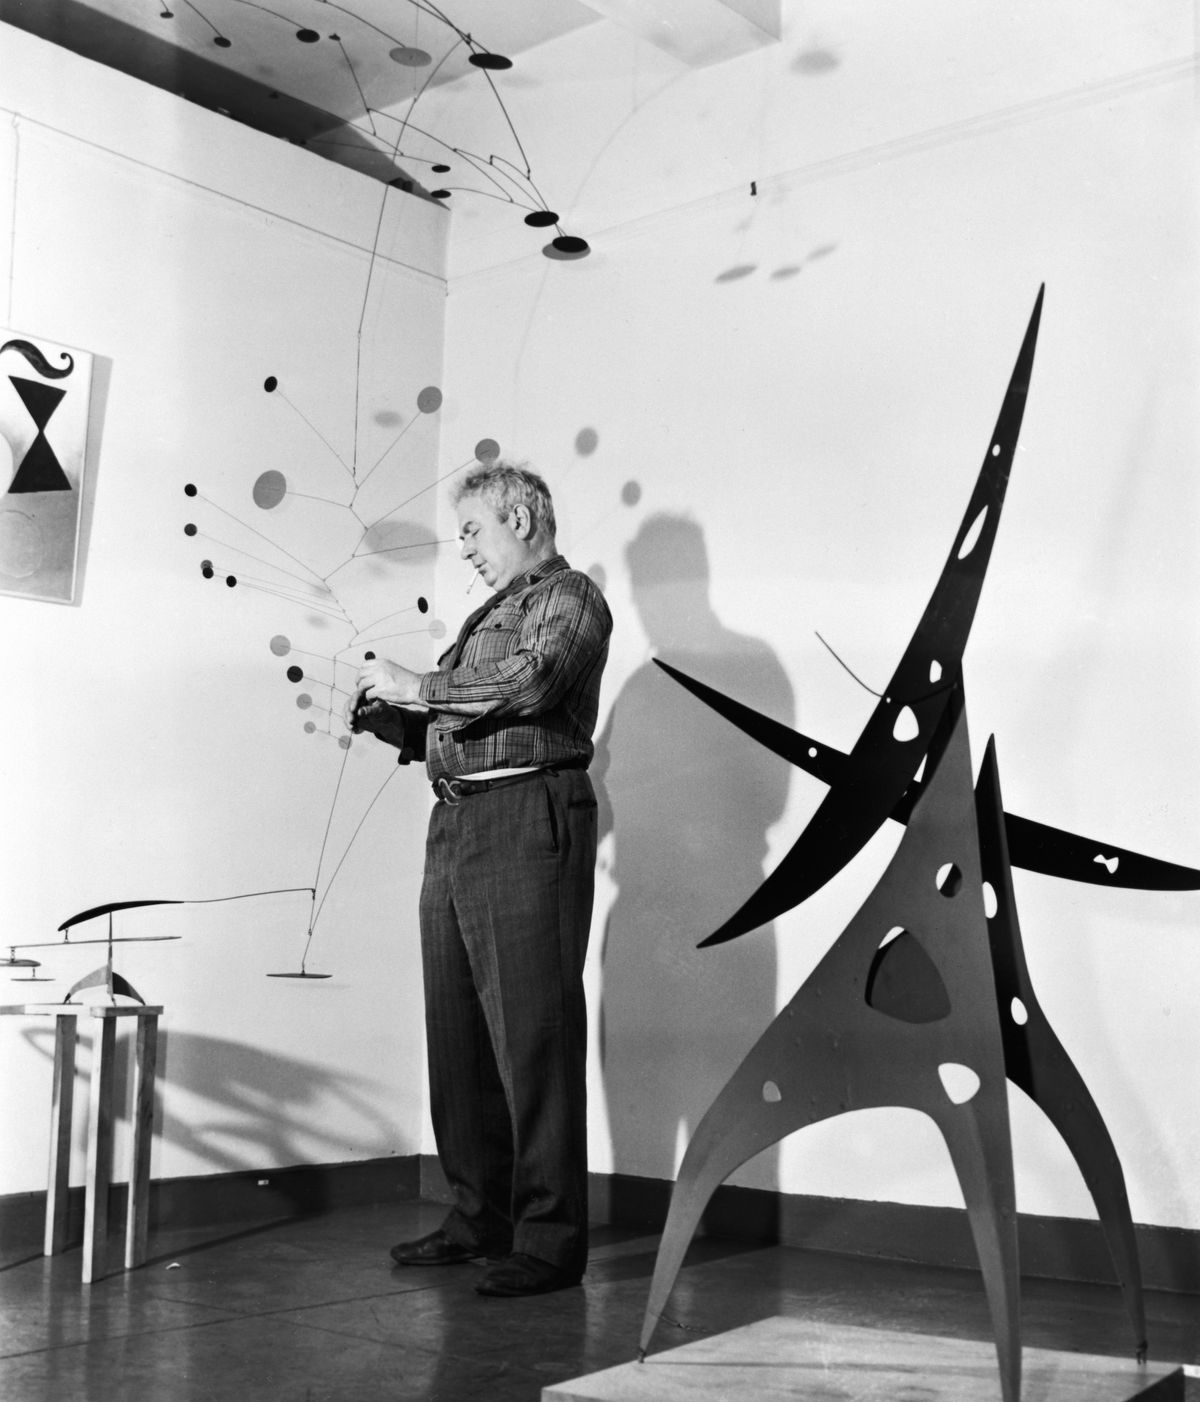 Calder with Gamma (1947) and Sword Plant (1947), Alexander Calder at Buchholz Gallery/Curt Valentin, New York, 1947 Photo courtesy of Calder Foundation, New York / Art Resource, New York. © 2023 Calder Foundation, New York / Artists Rights Society (ARS), New York.